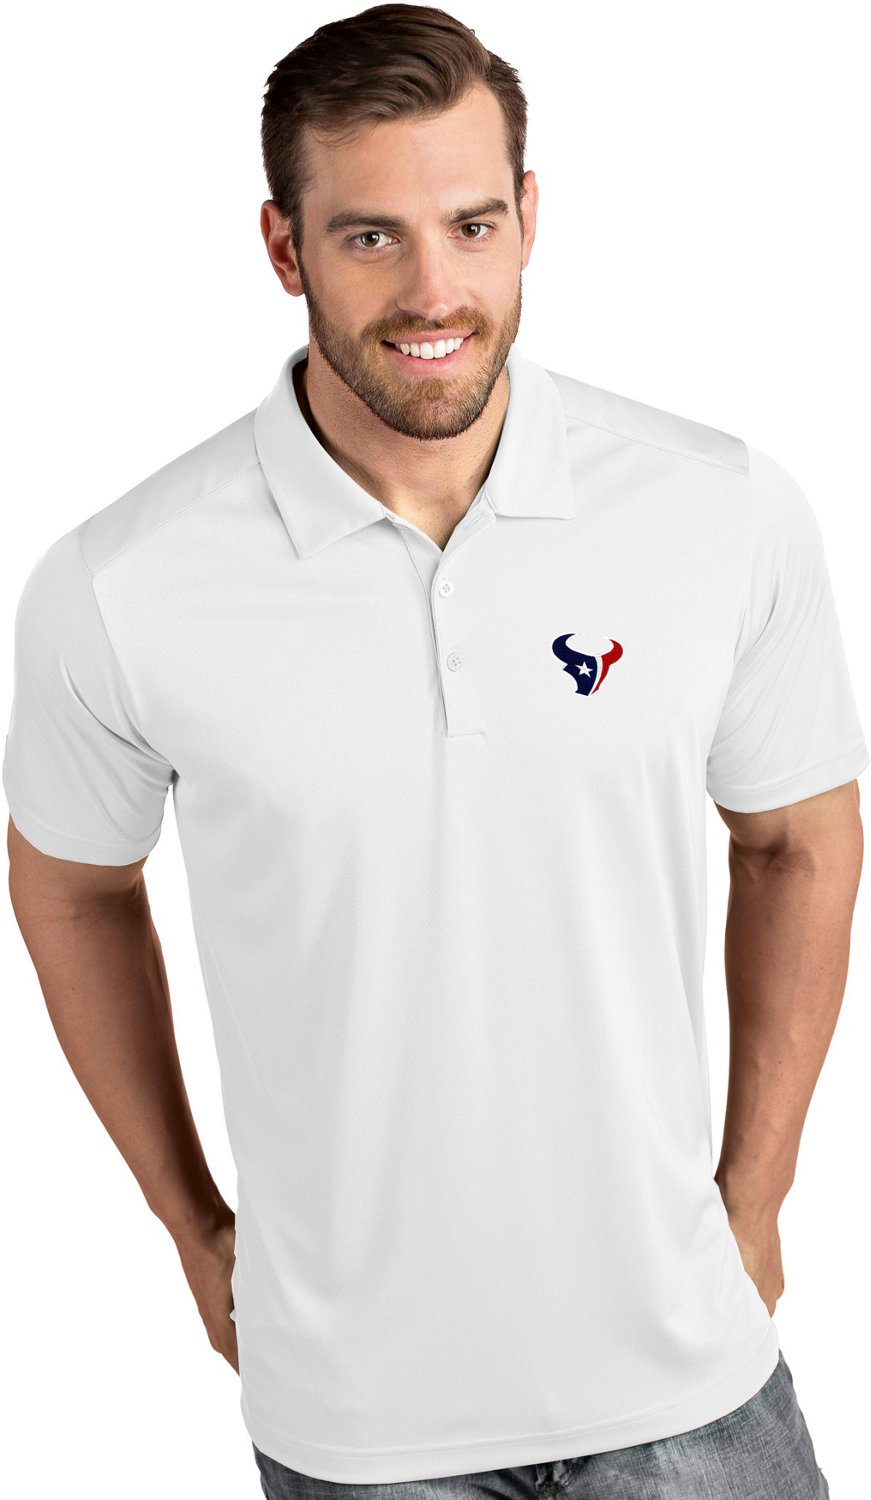 Texans Collared Shirts | Academy